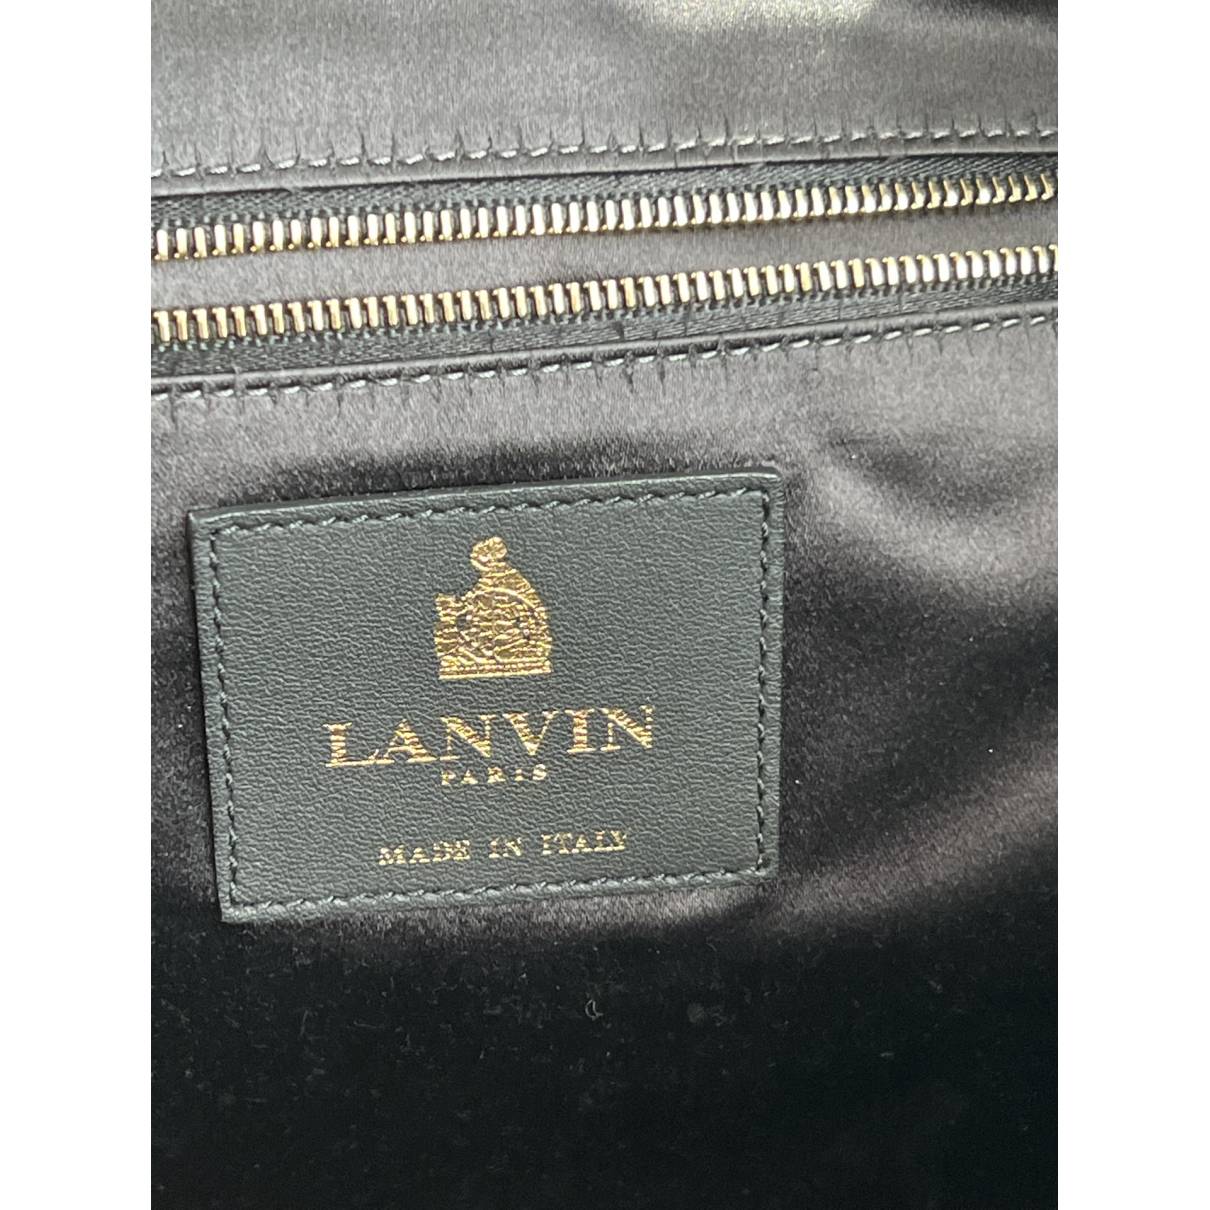 Buy Lanvin Amalia leather tote online